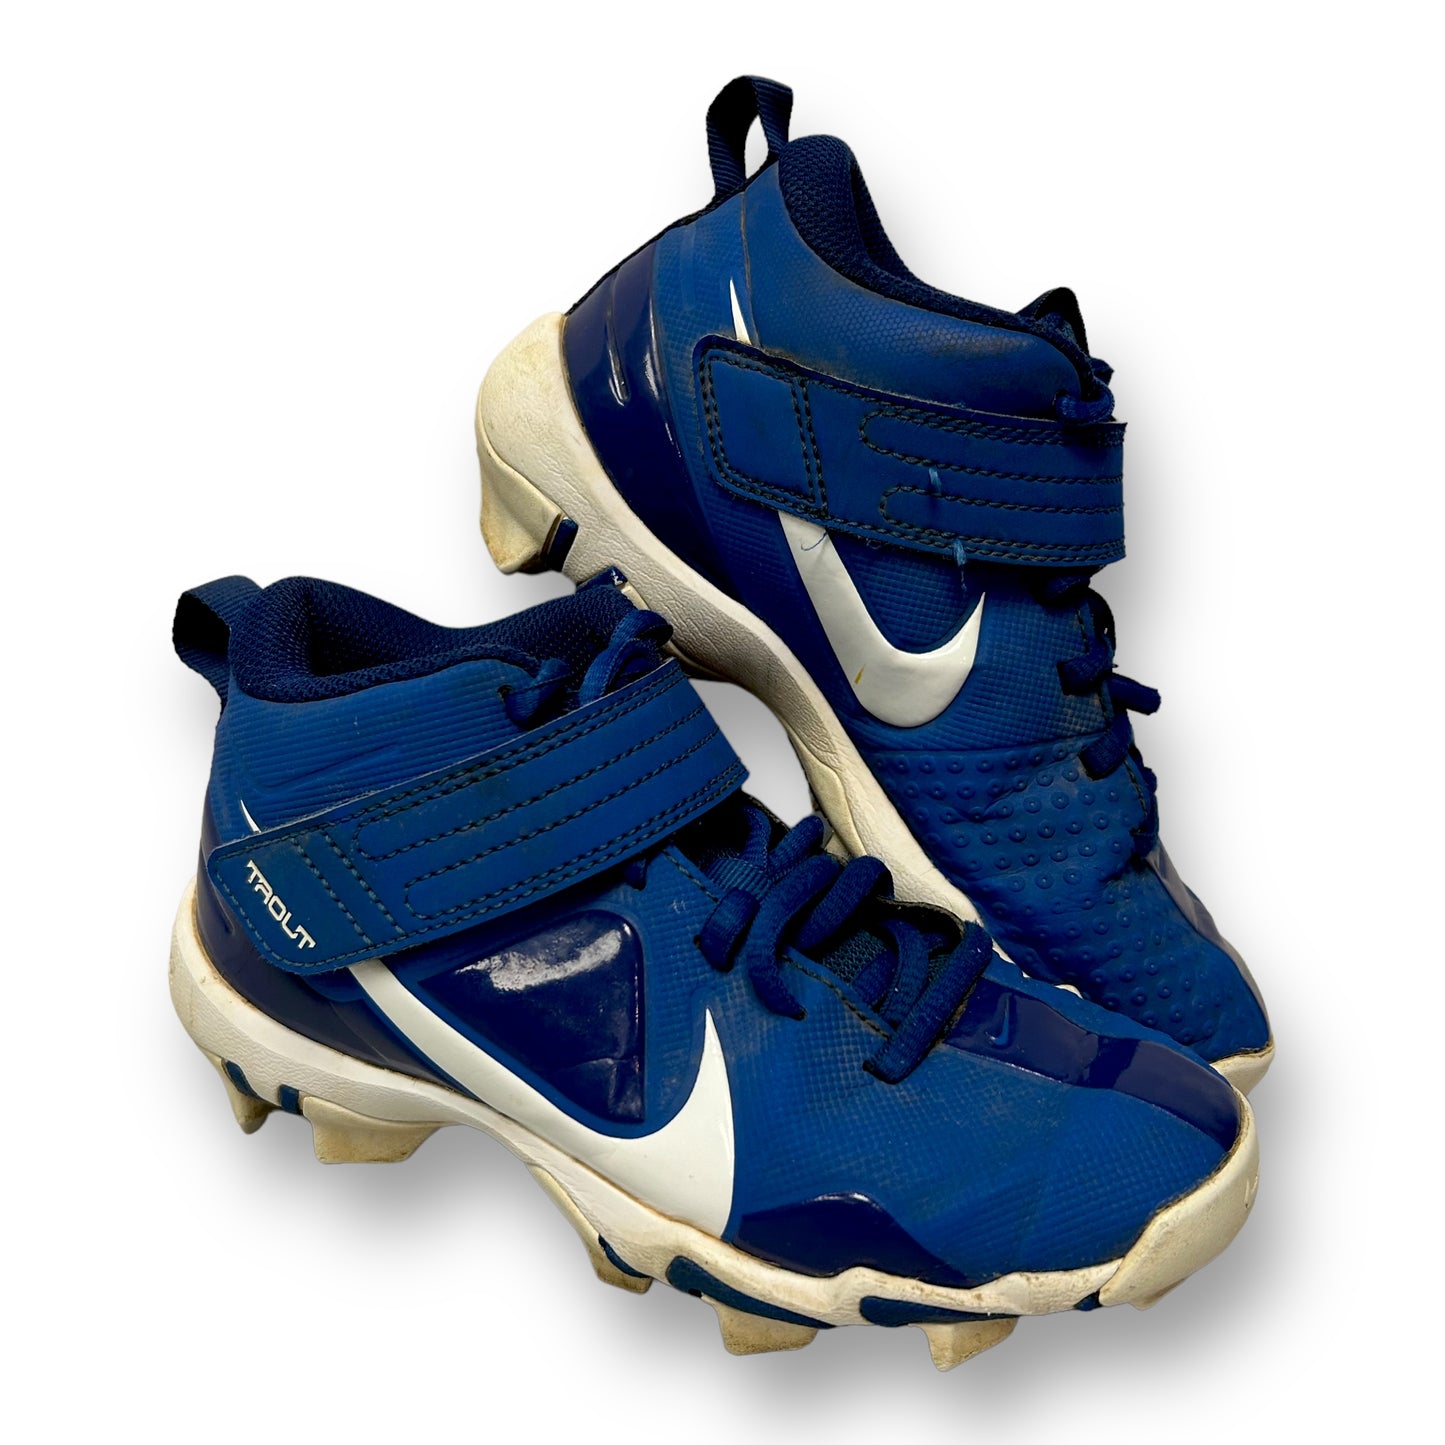 Nike Youth Boy Size 1 Blue & White Fastflex Trout Baseball Cleats